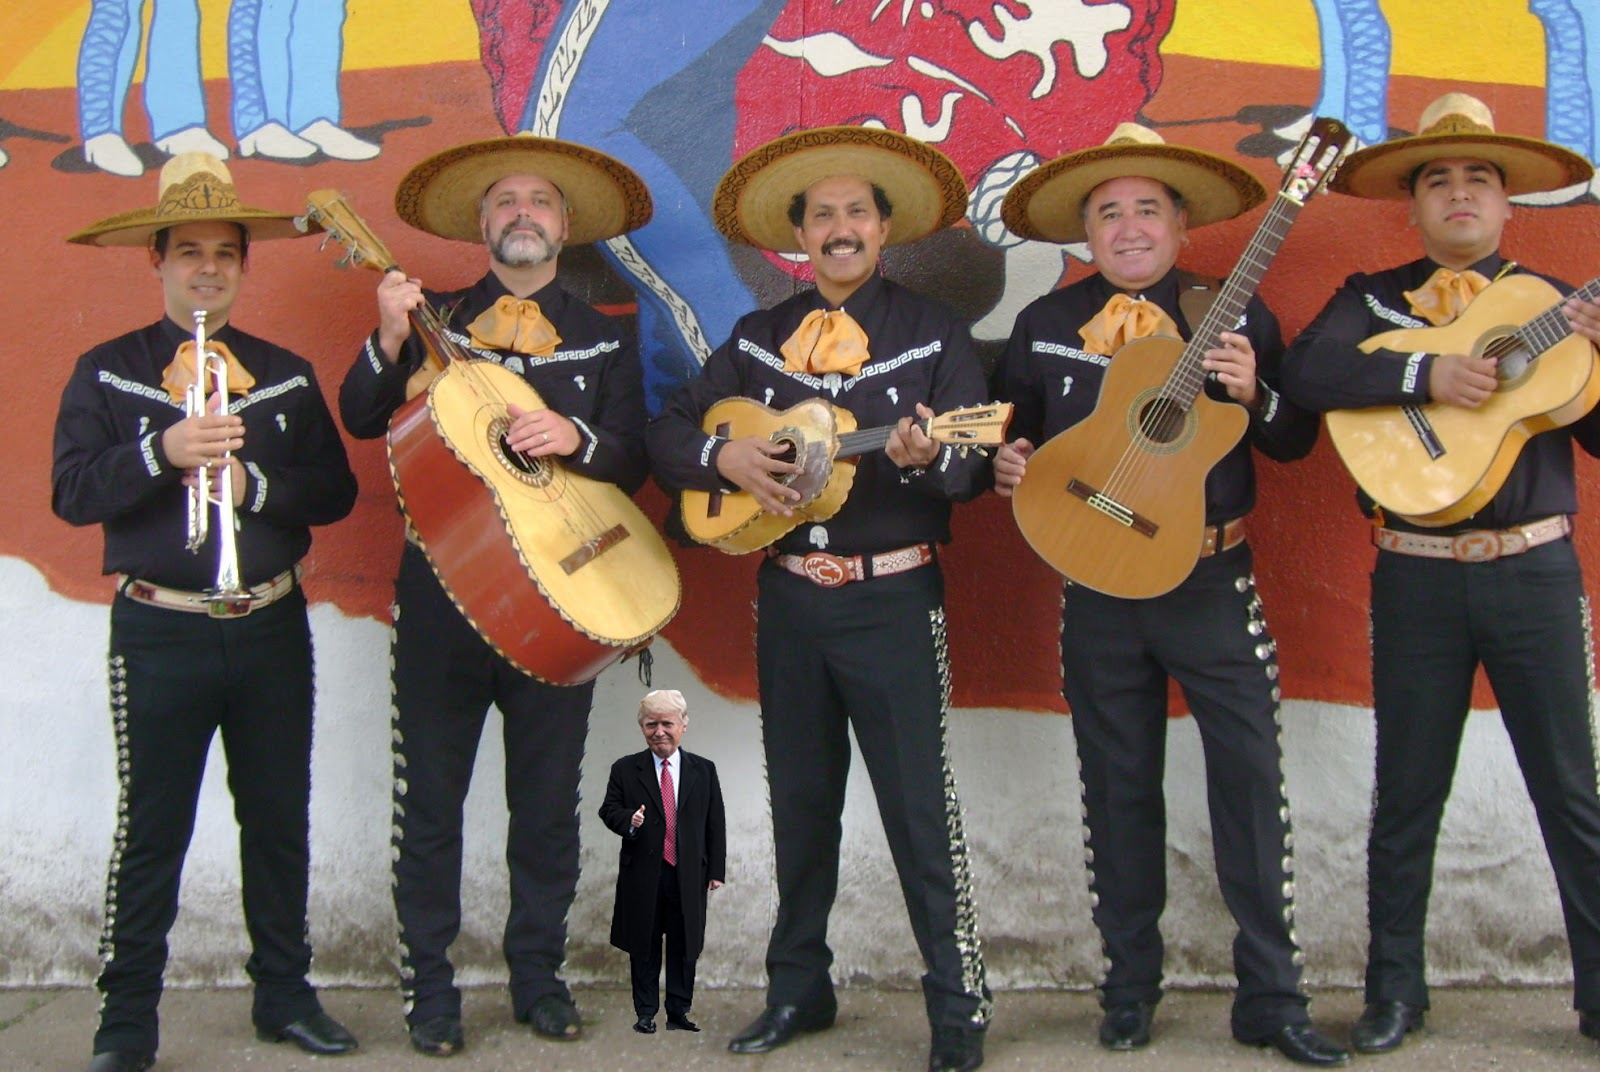 Tiny Trump approves the mariachi band.